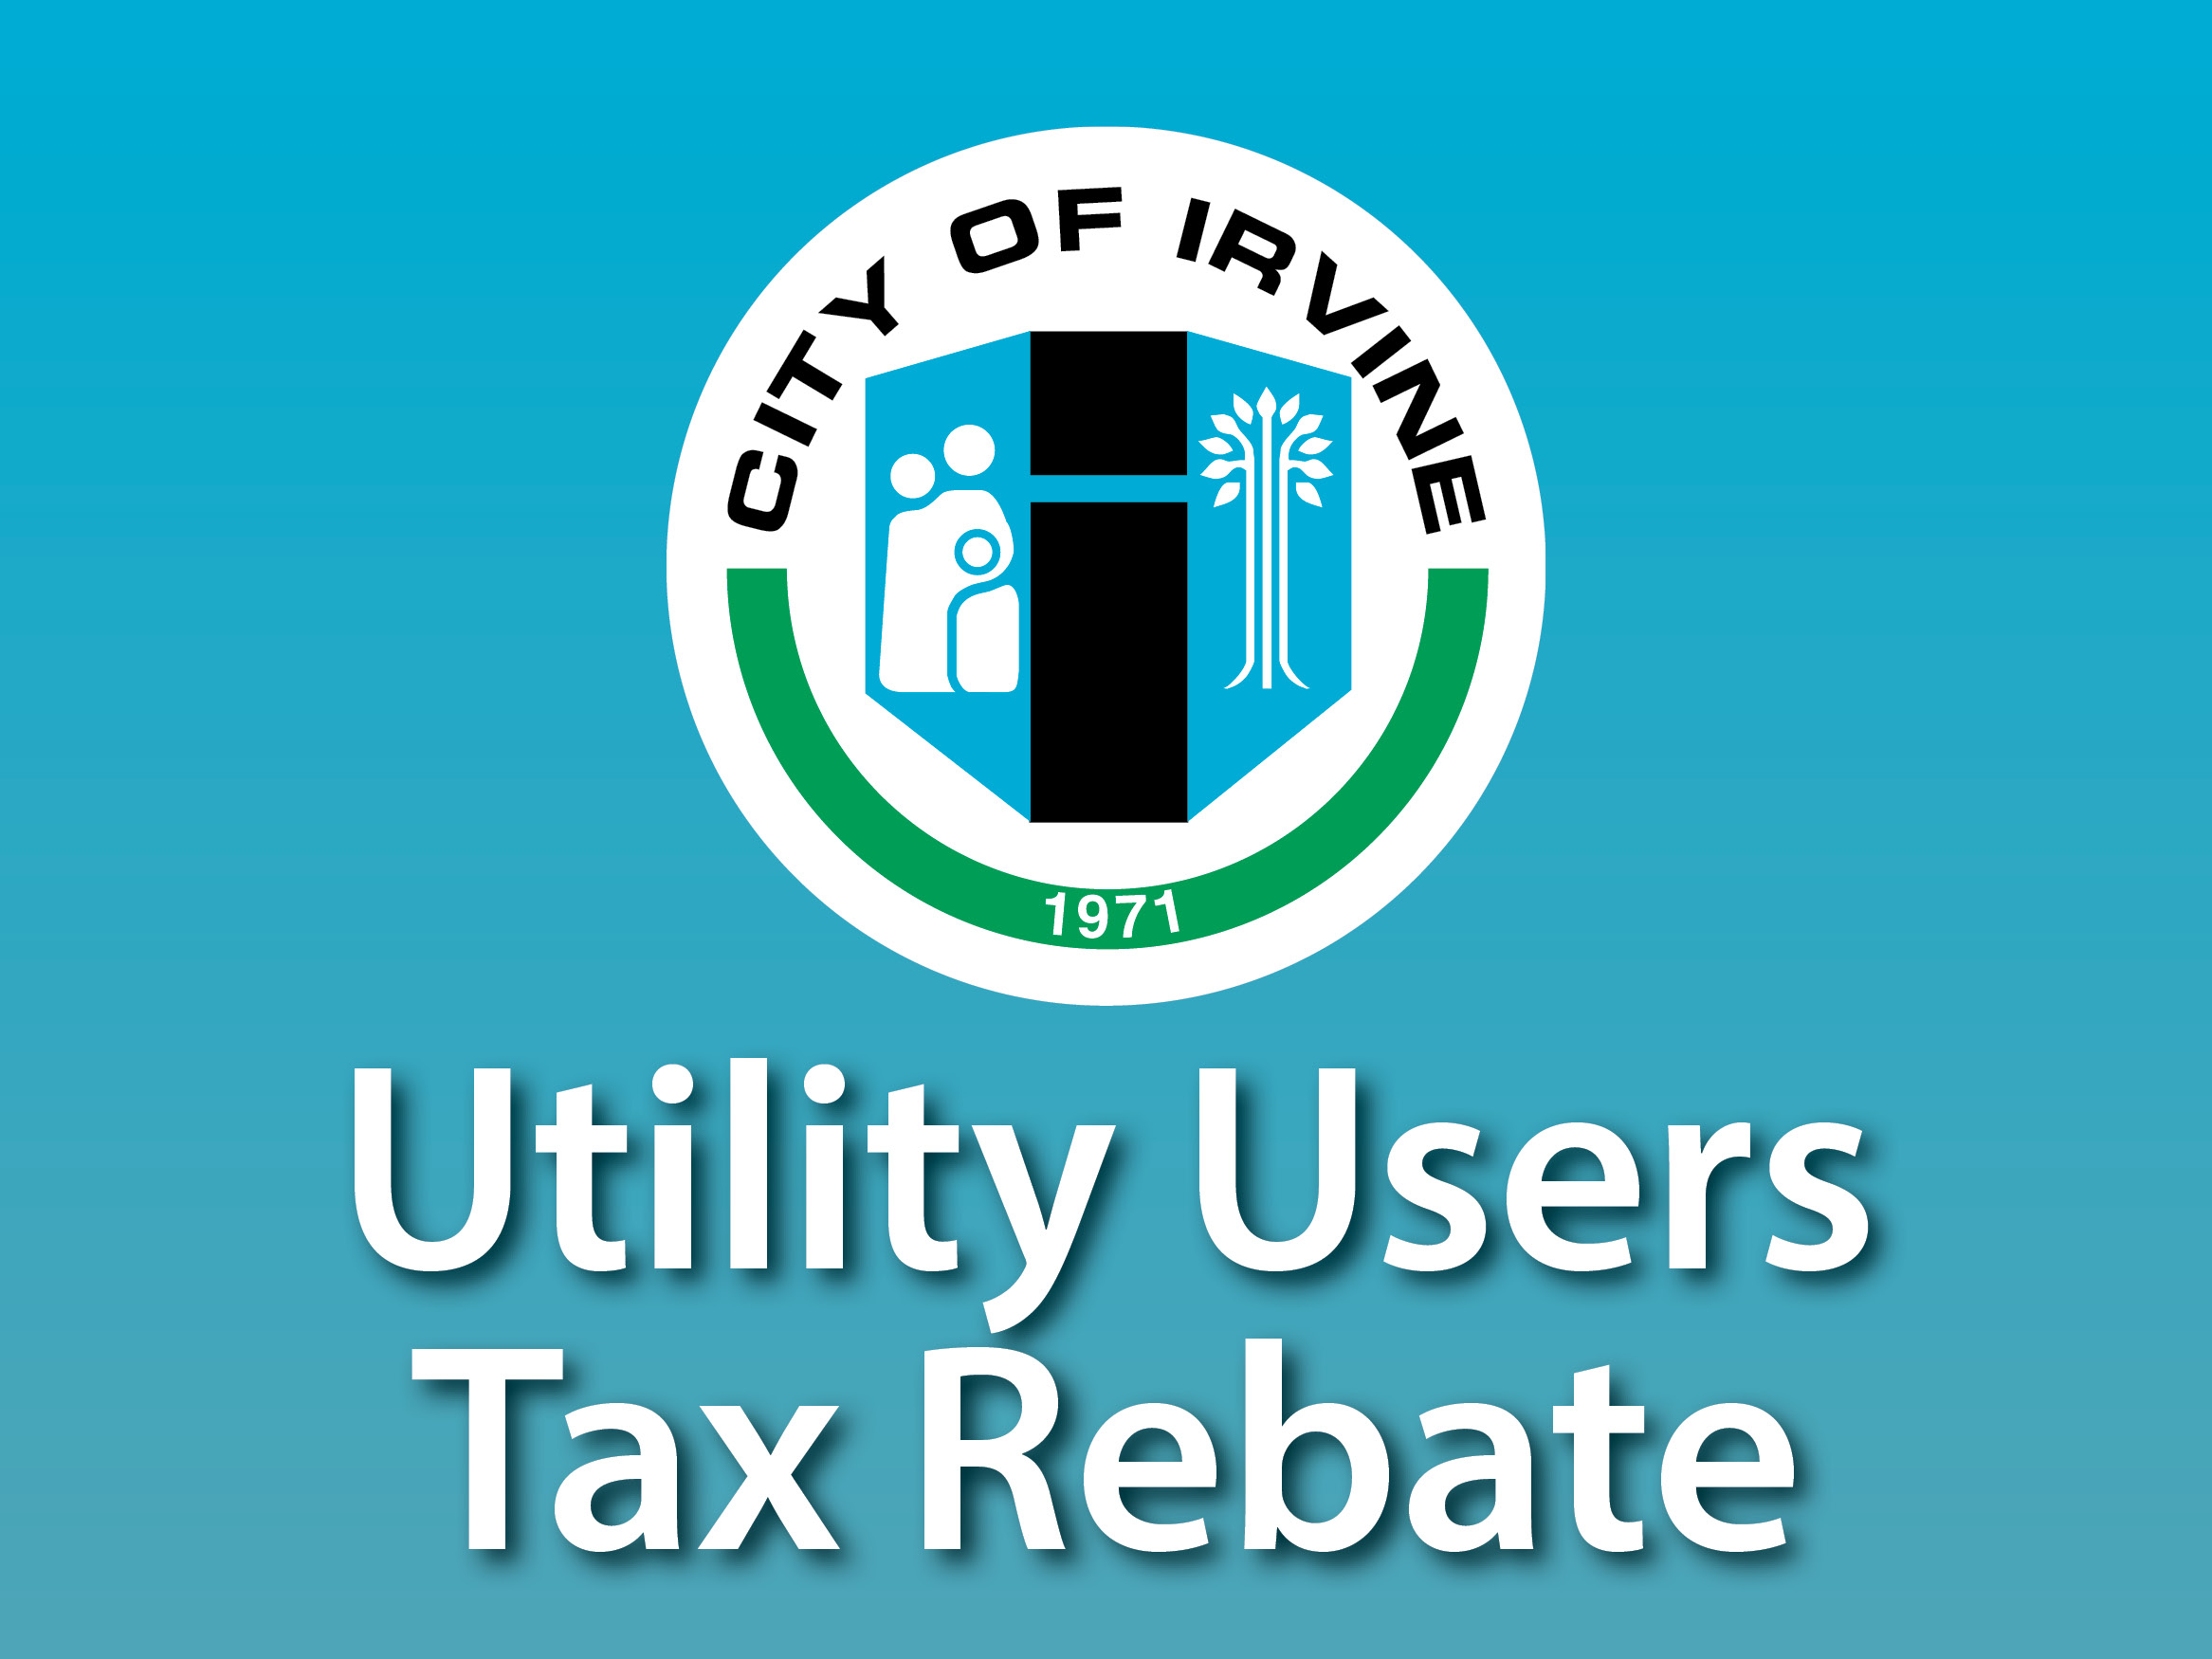 utility-users-tax-rebate-city-of-irvine